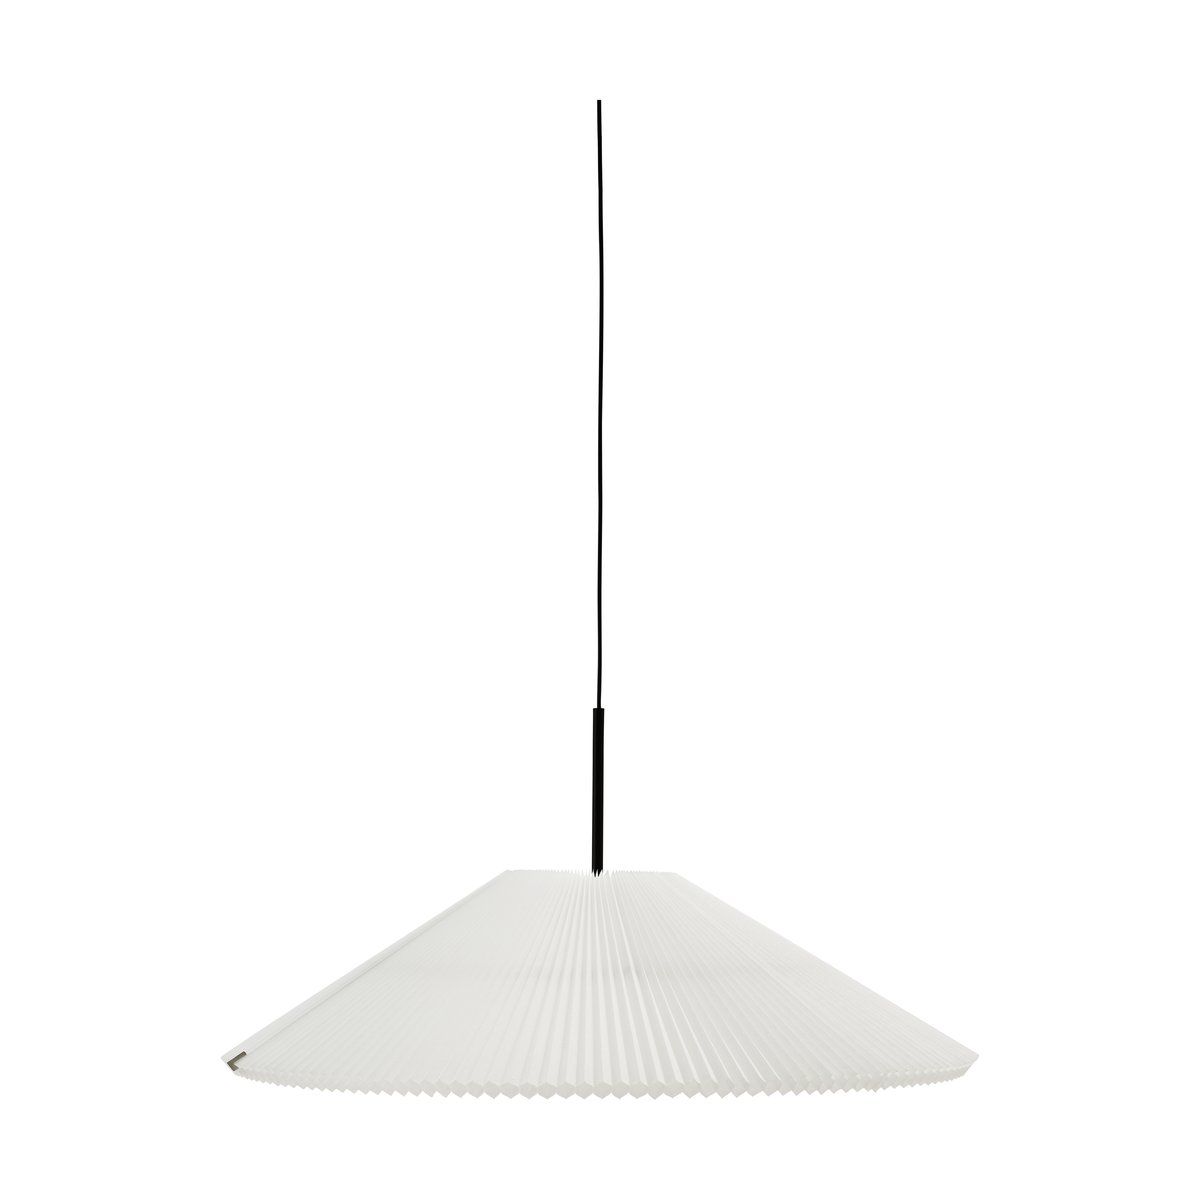 New Works Nebra Small hanglamp Ø40-70 cm White